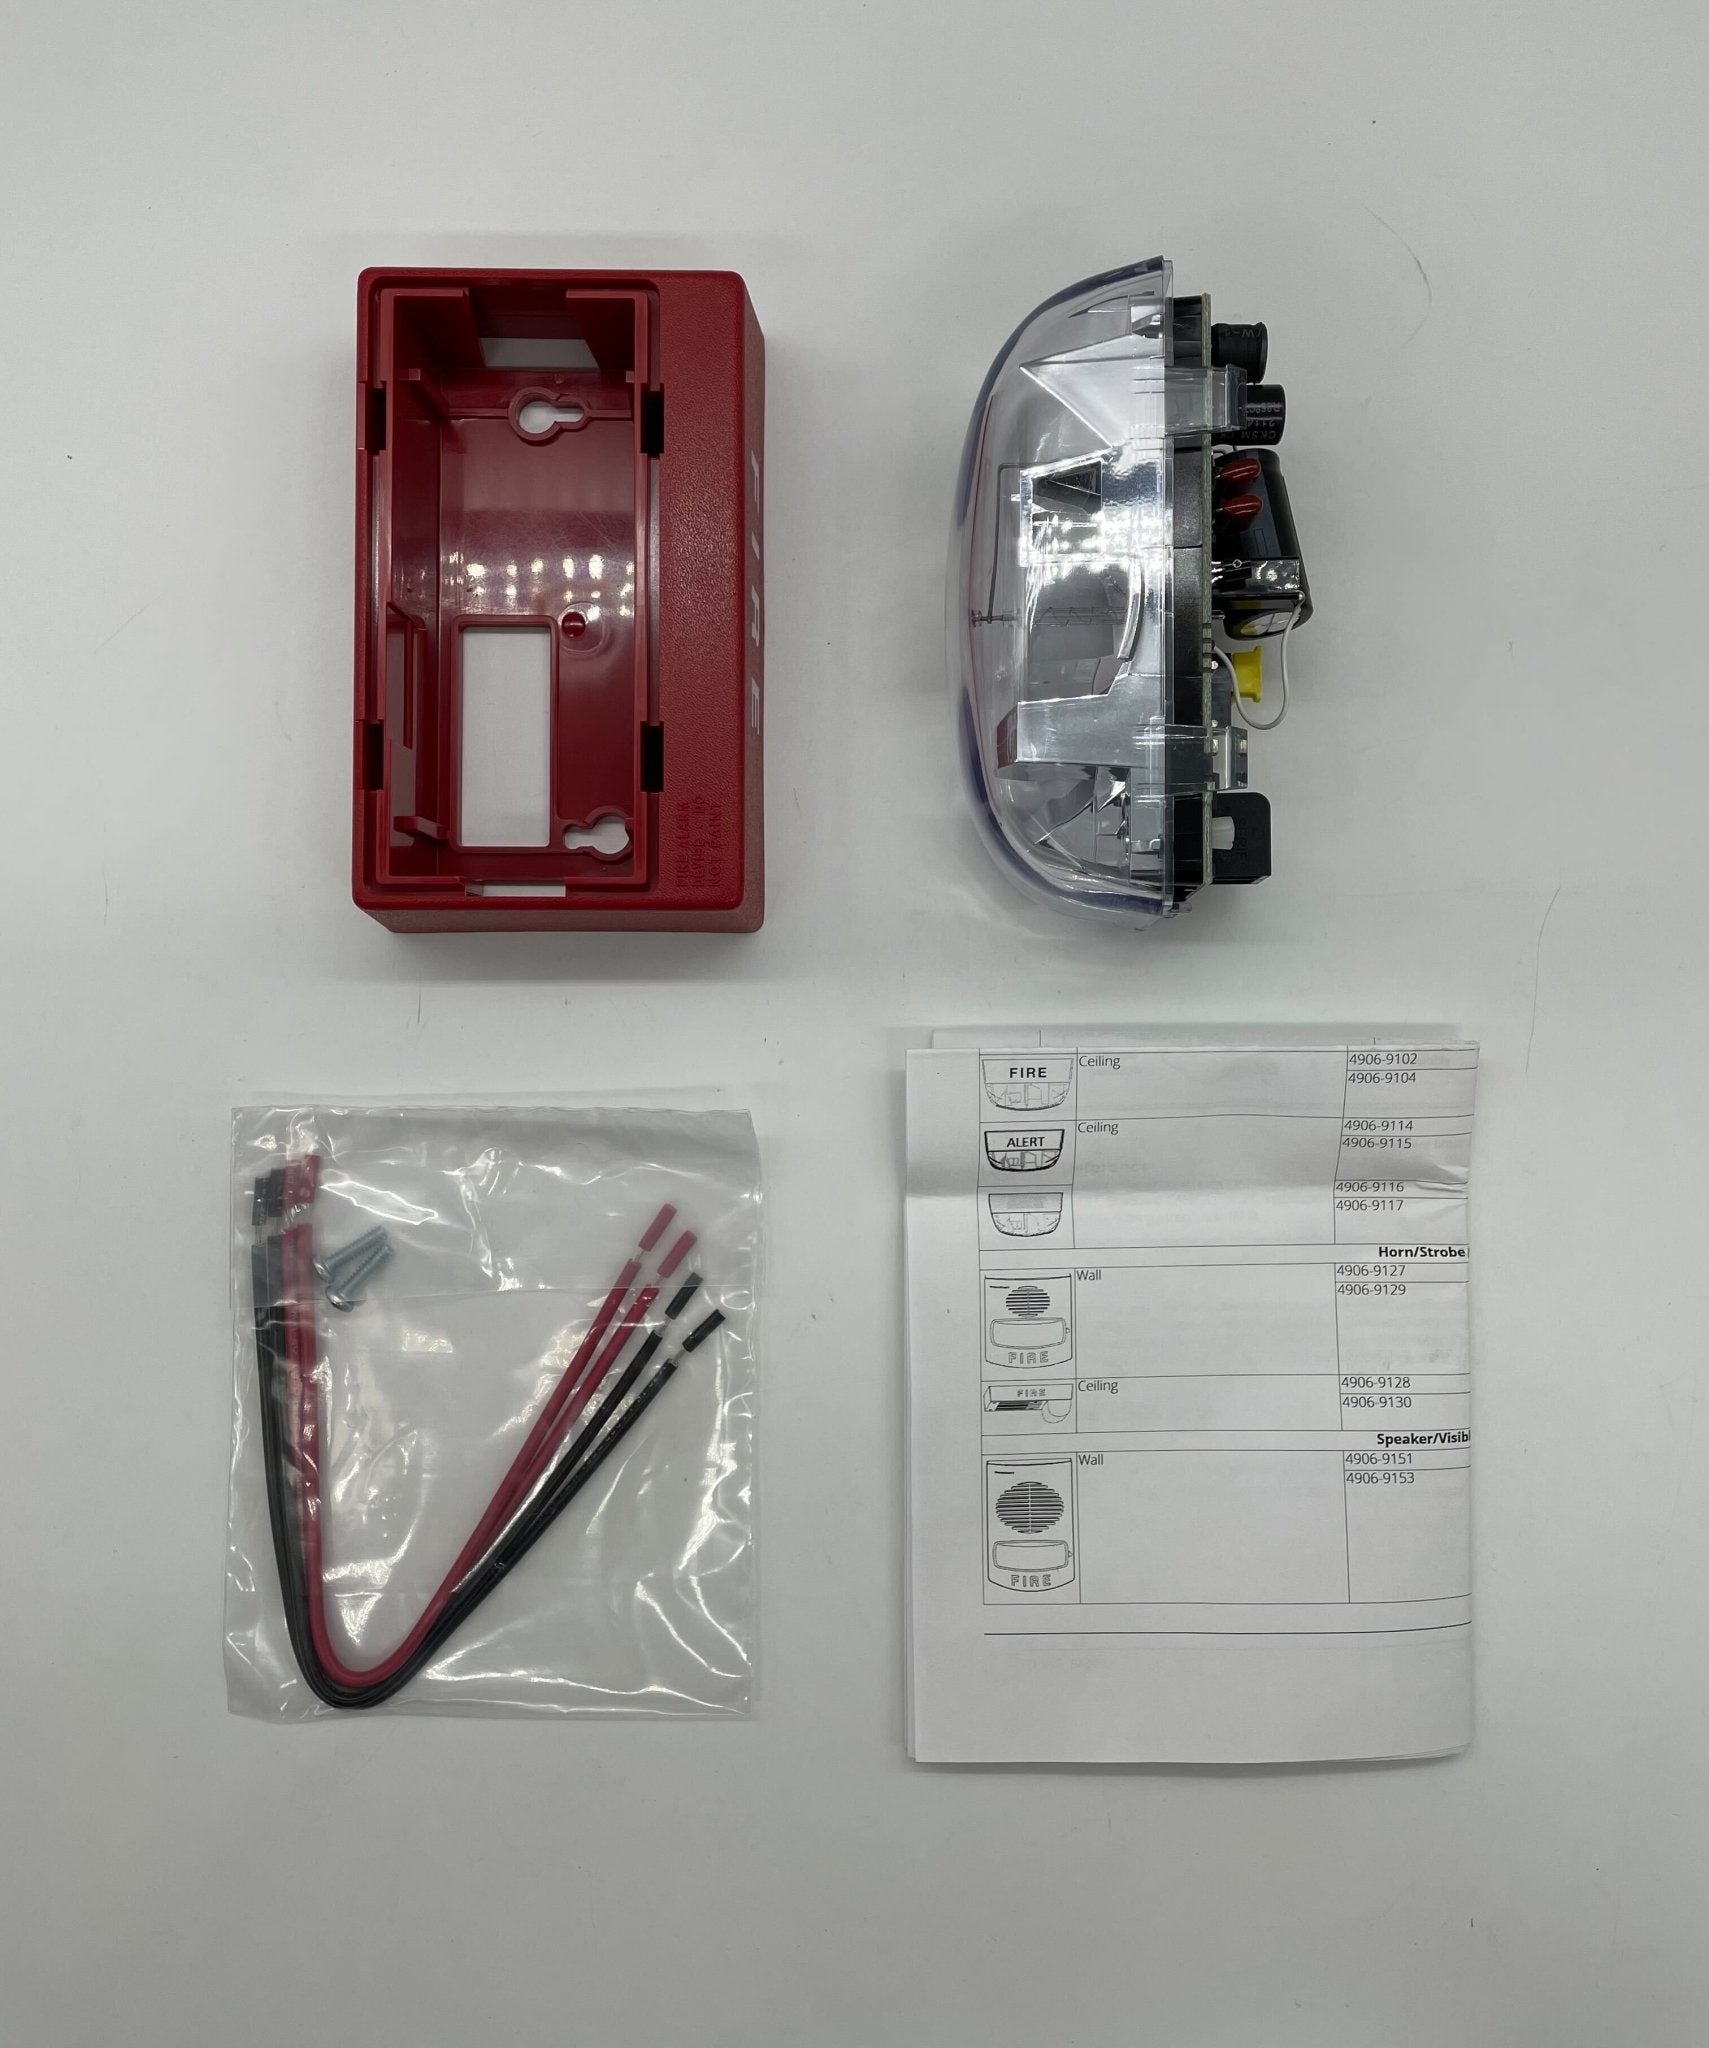 Simplex 4906-9102 - The Fire Alarm Supplier